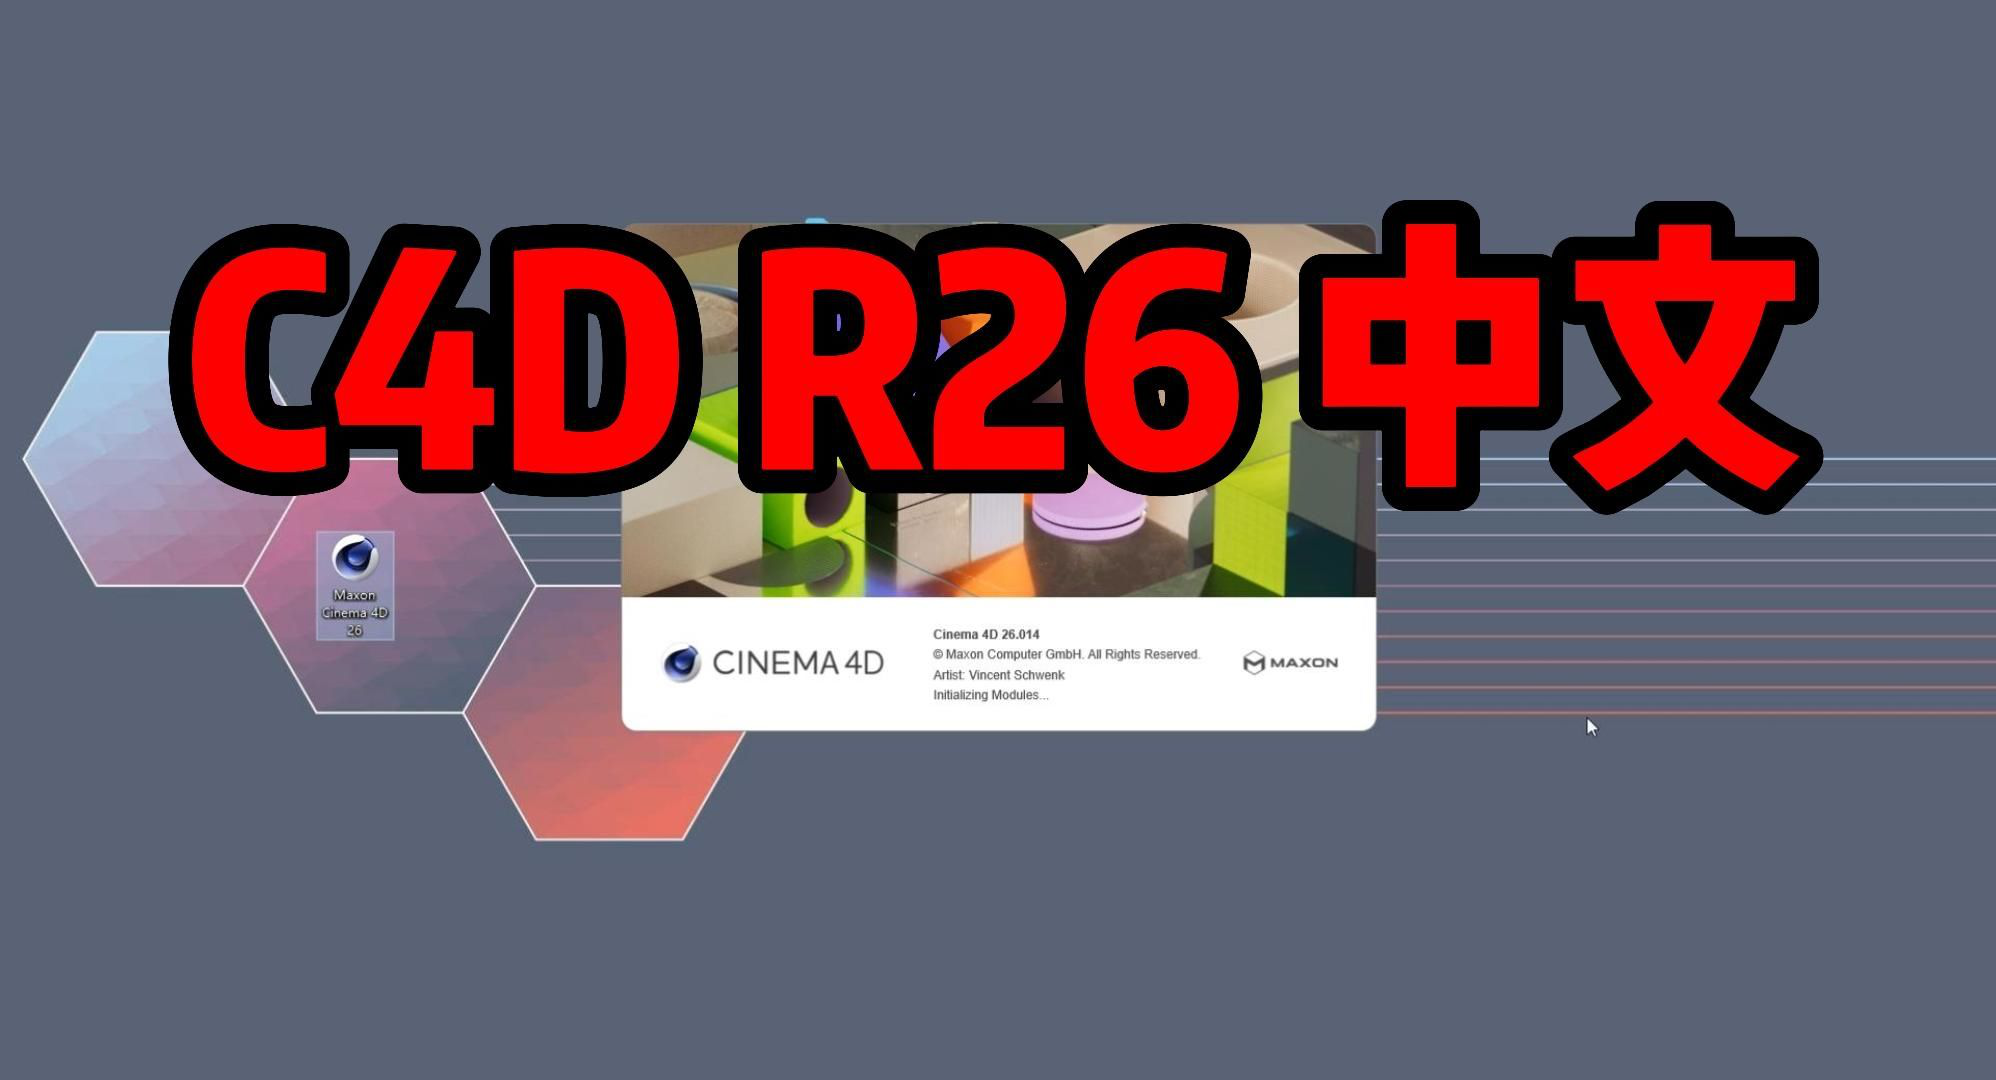 CINEMA 4D Studio R26.107 / 2024.0.2 download the new version for windows